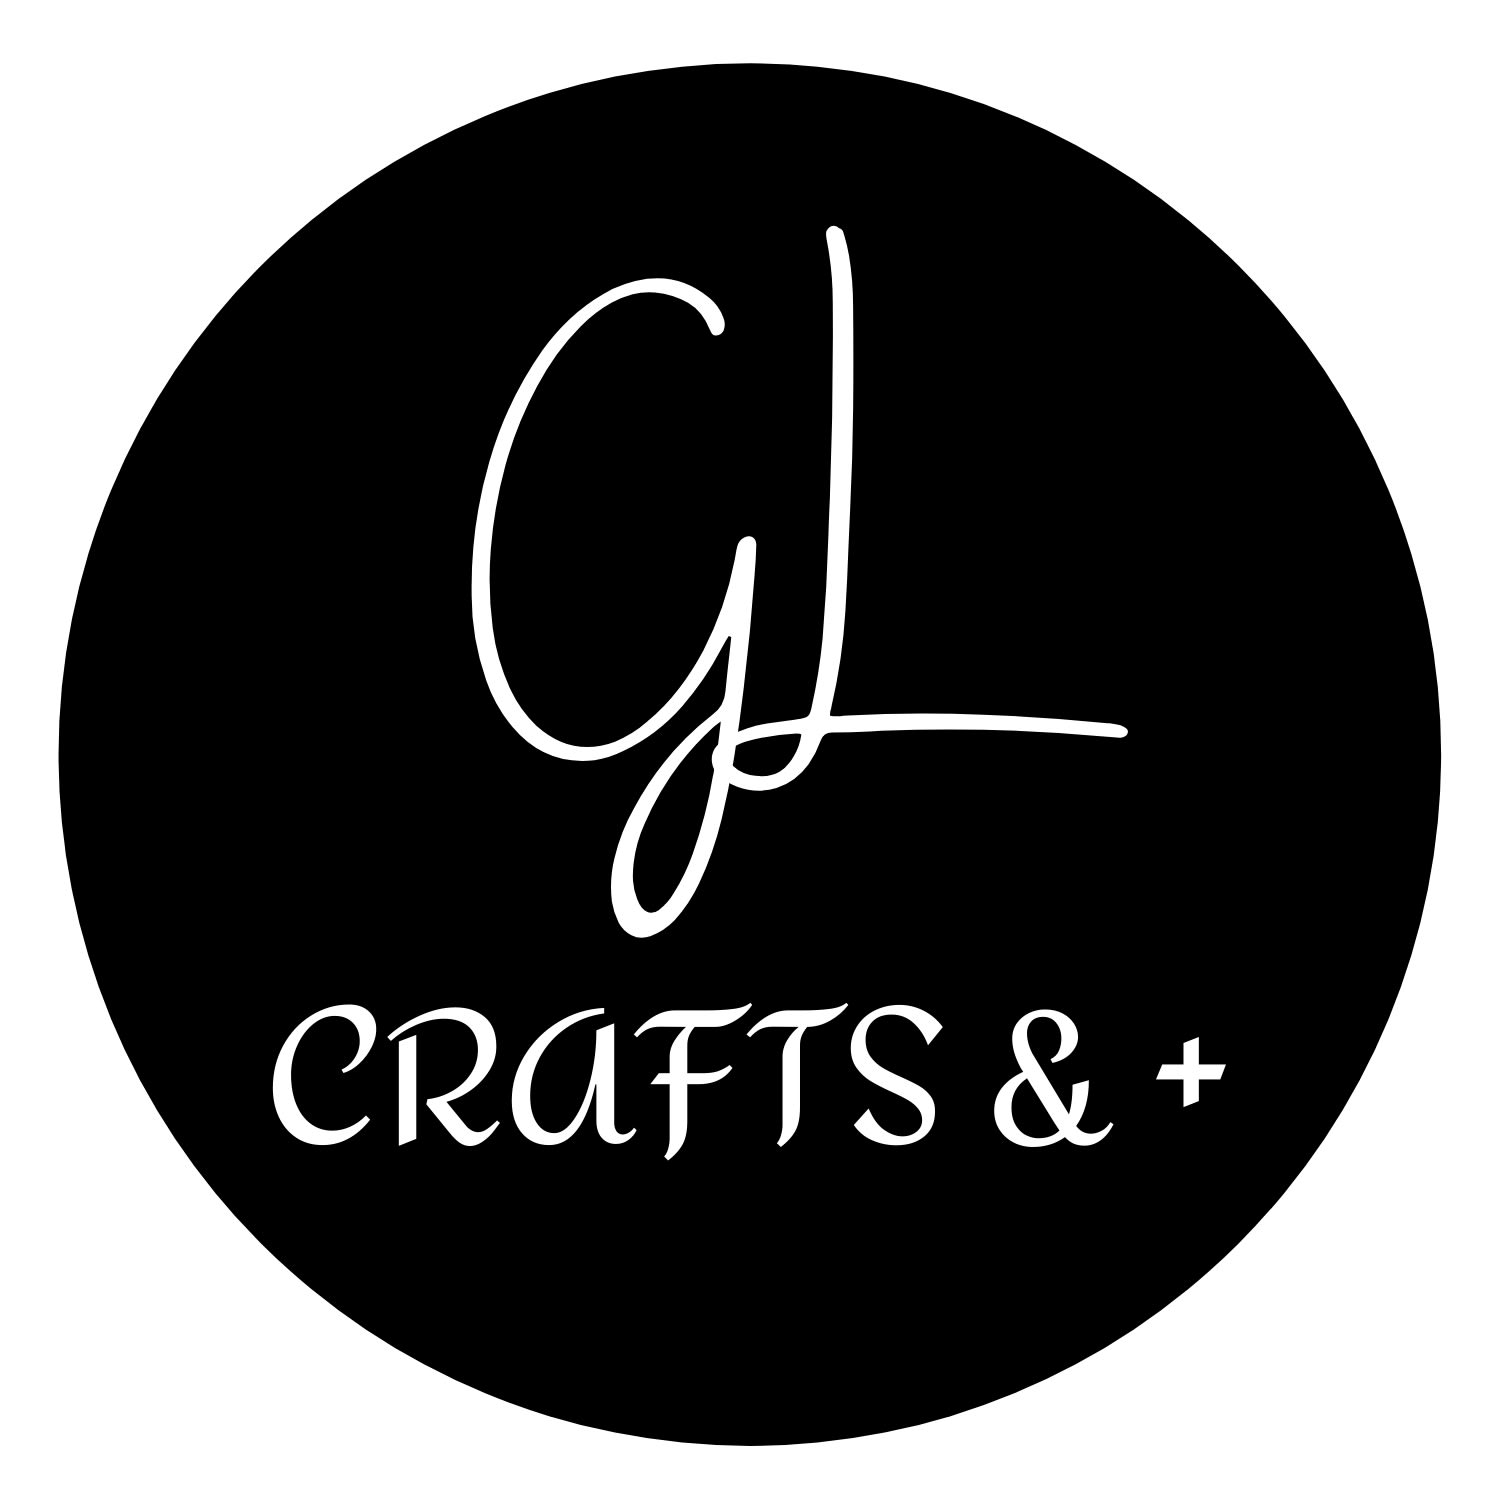 GL Crafts & +